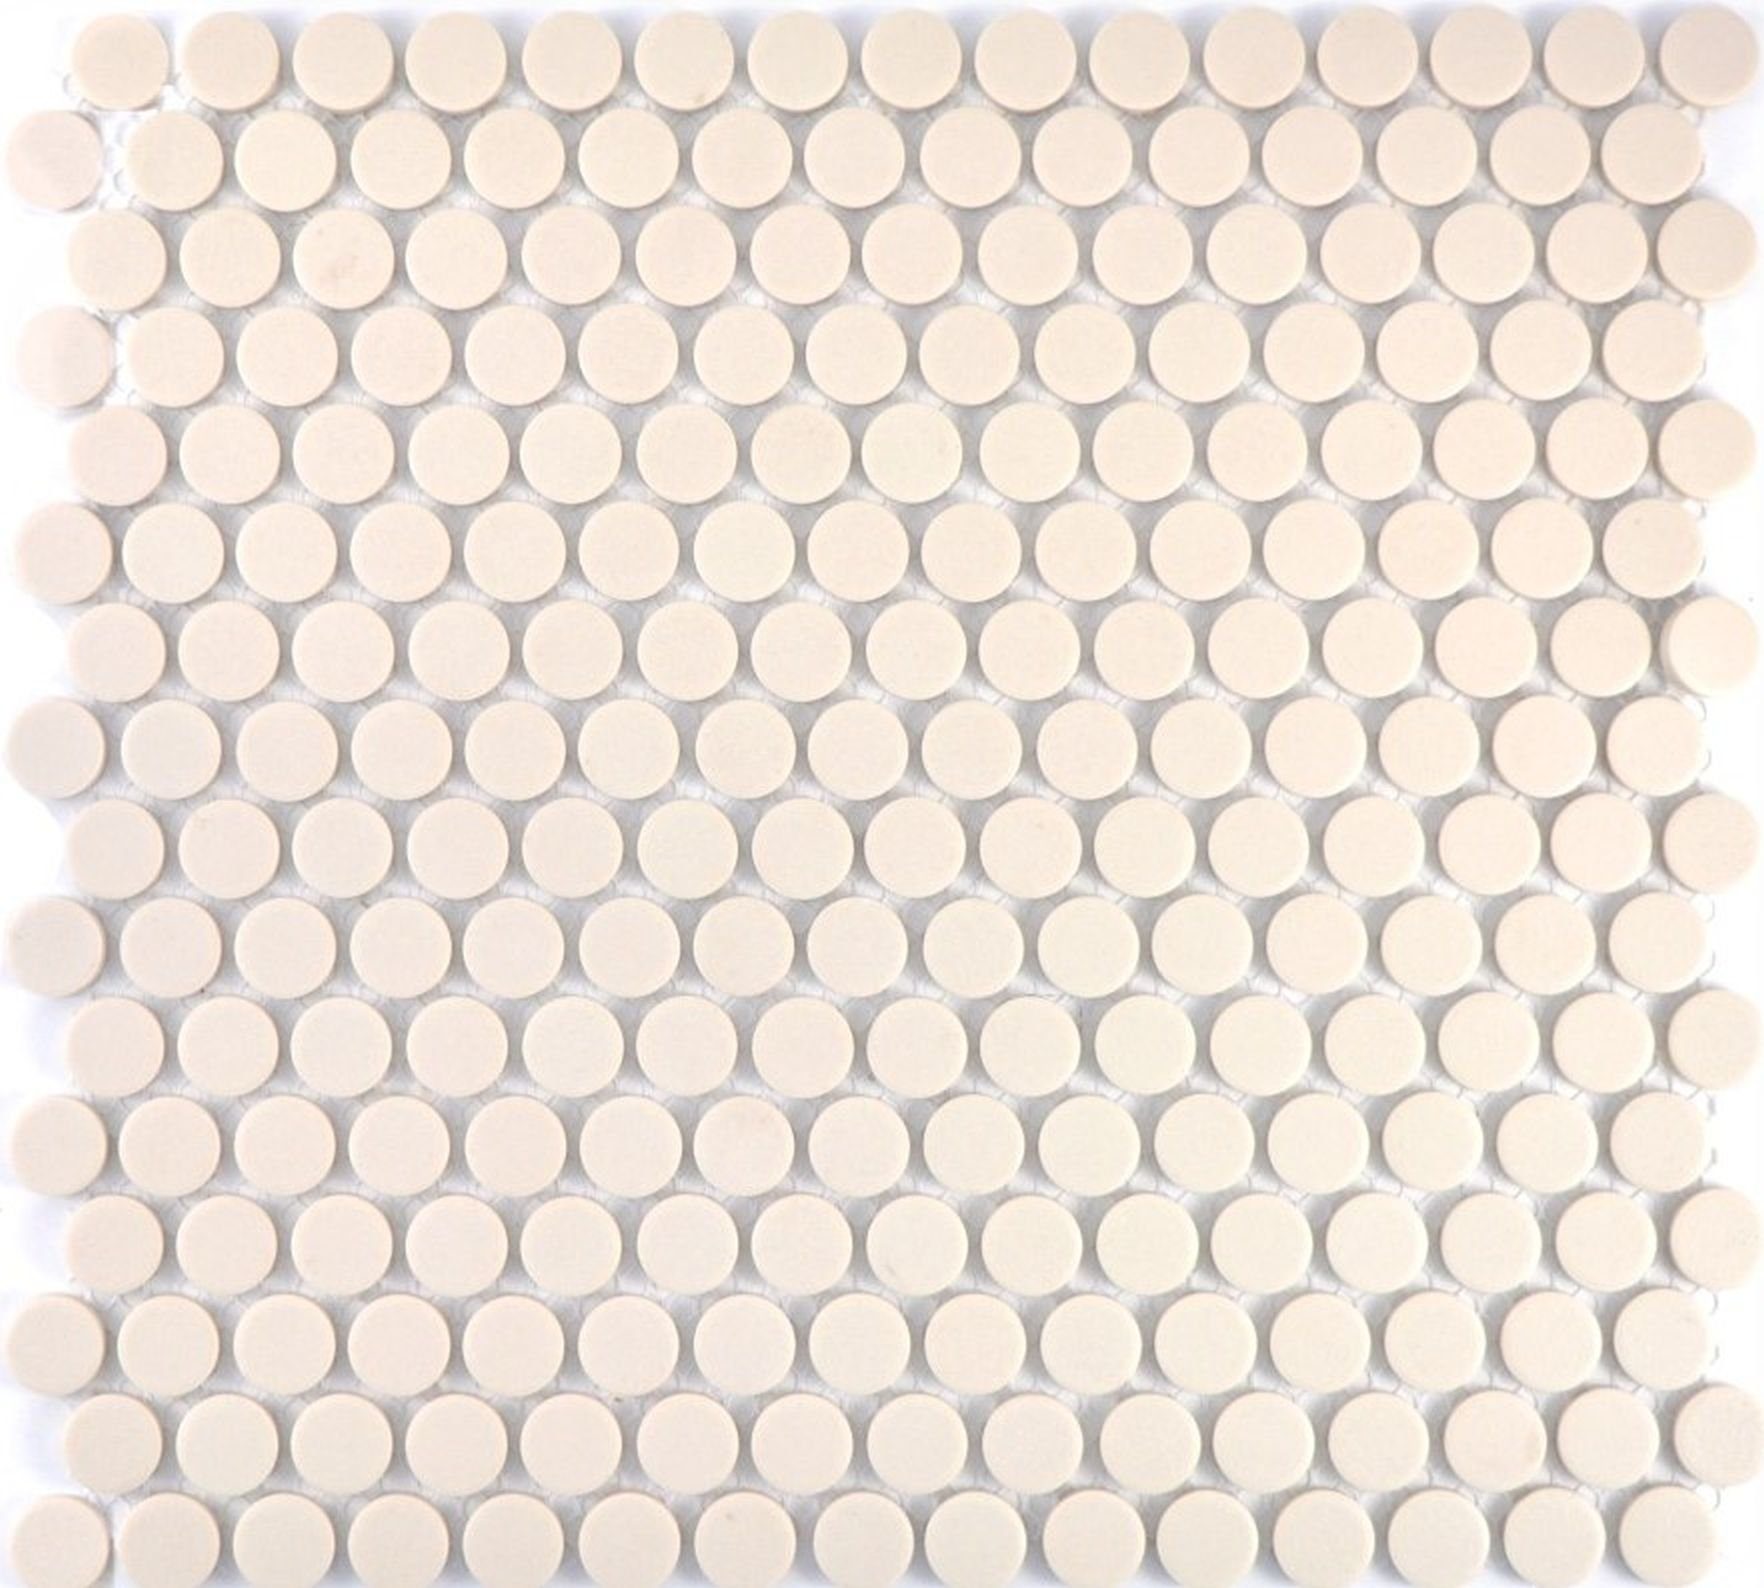 matt Knopf unglasmosaik 10 Mosani Mosaikfliesen weiß / Matten Keramikmosaik Bodenfliese